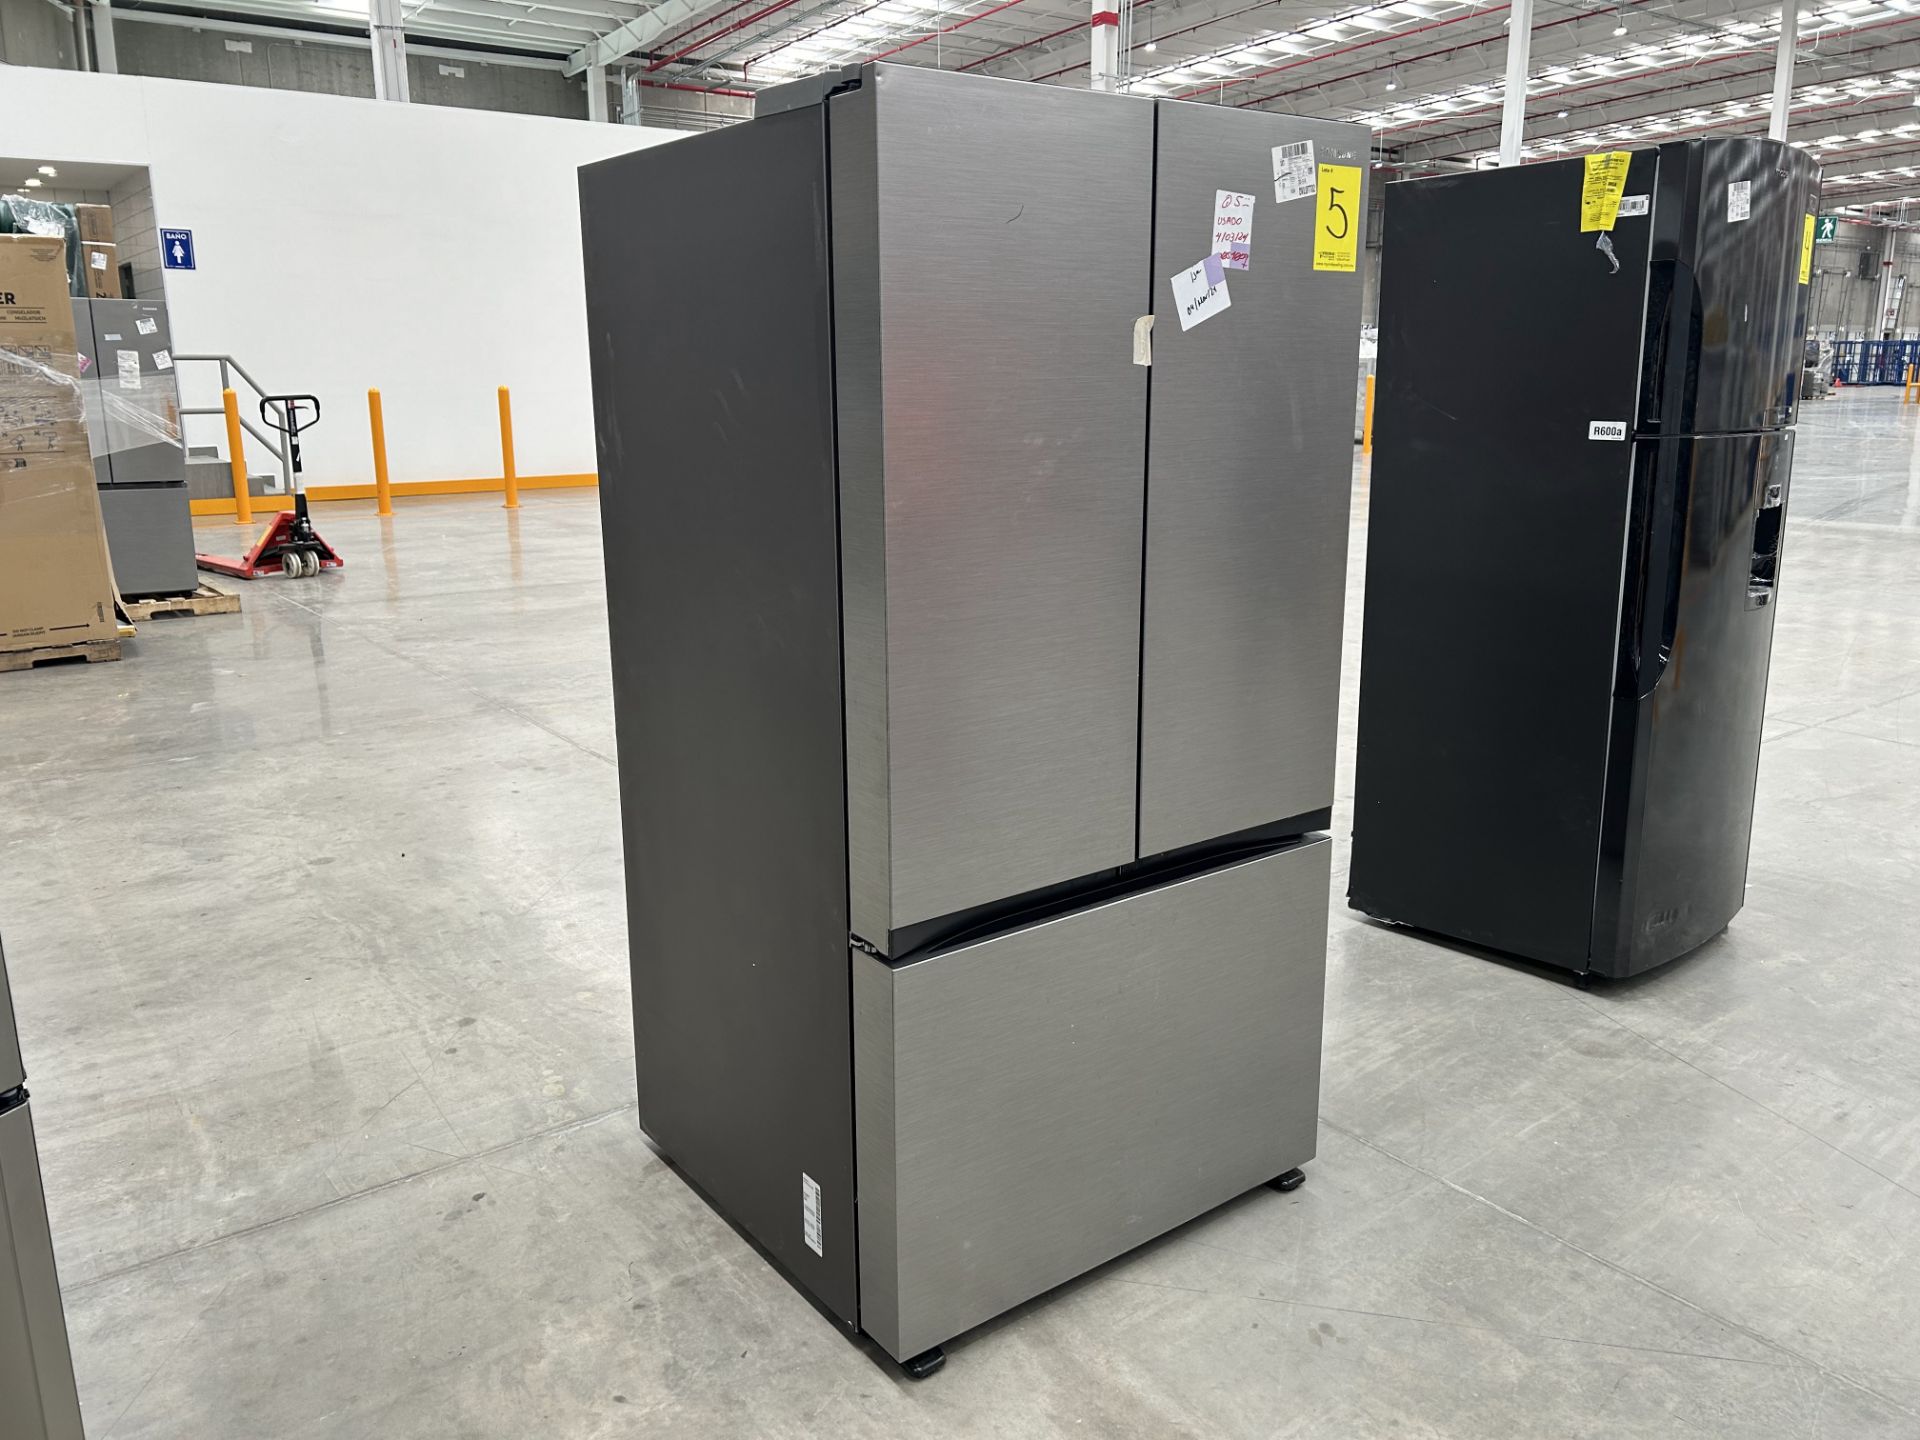 1 refrigerador Marca SAMSUNG, Modelo FR32CG5A10S9E, Color GRIS (No se asegura su funcionamiento, fa - Image 3 of 7